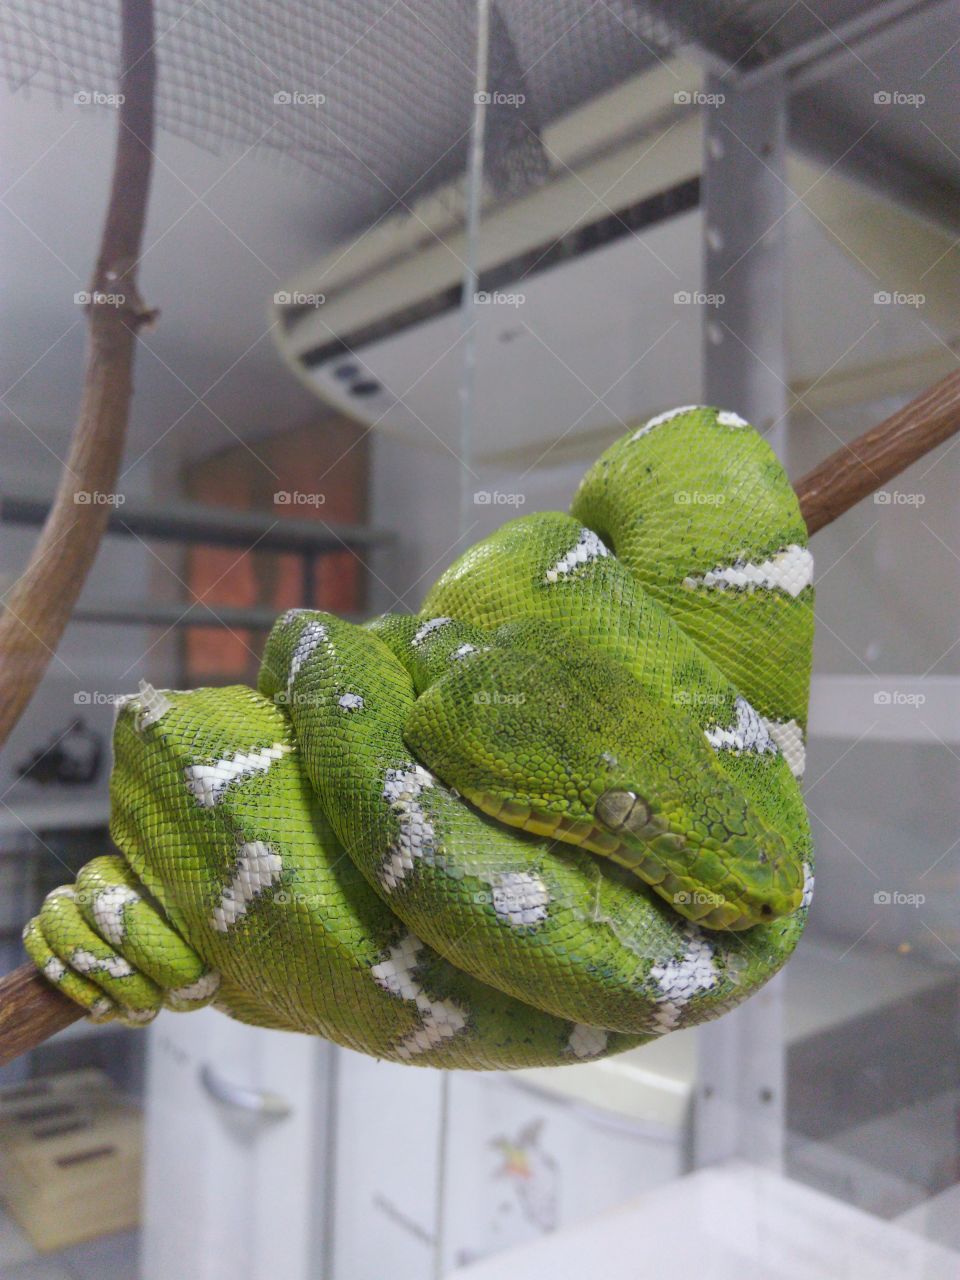 Cobra-papagaio (Corallus batesii),perinquitamboia, araboia, araramboia, jiboia-verde, píton-verde-da-árvore. Amazônia.